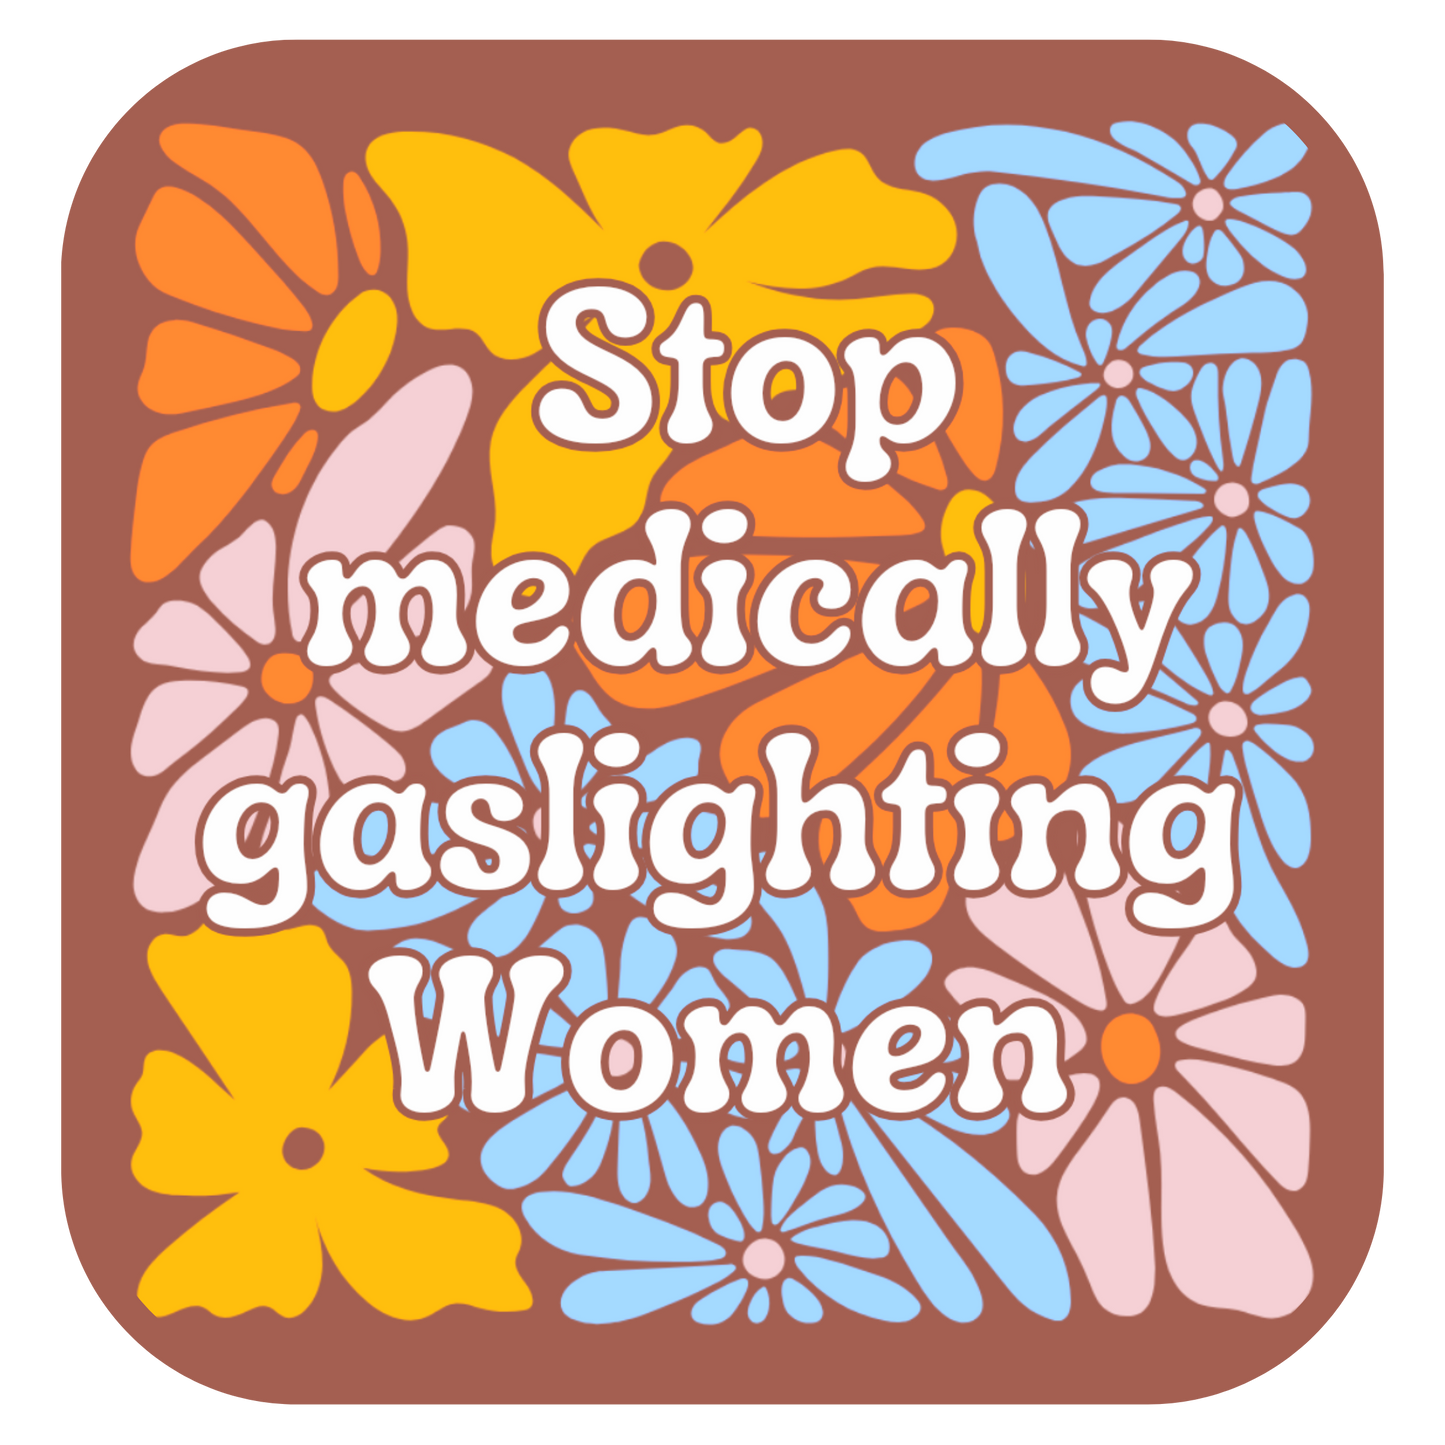 Stop gaslighting women sticker retro Healthcare womens: Holographic